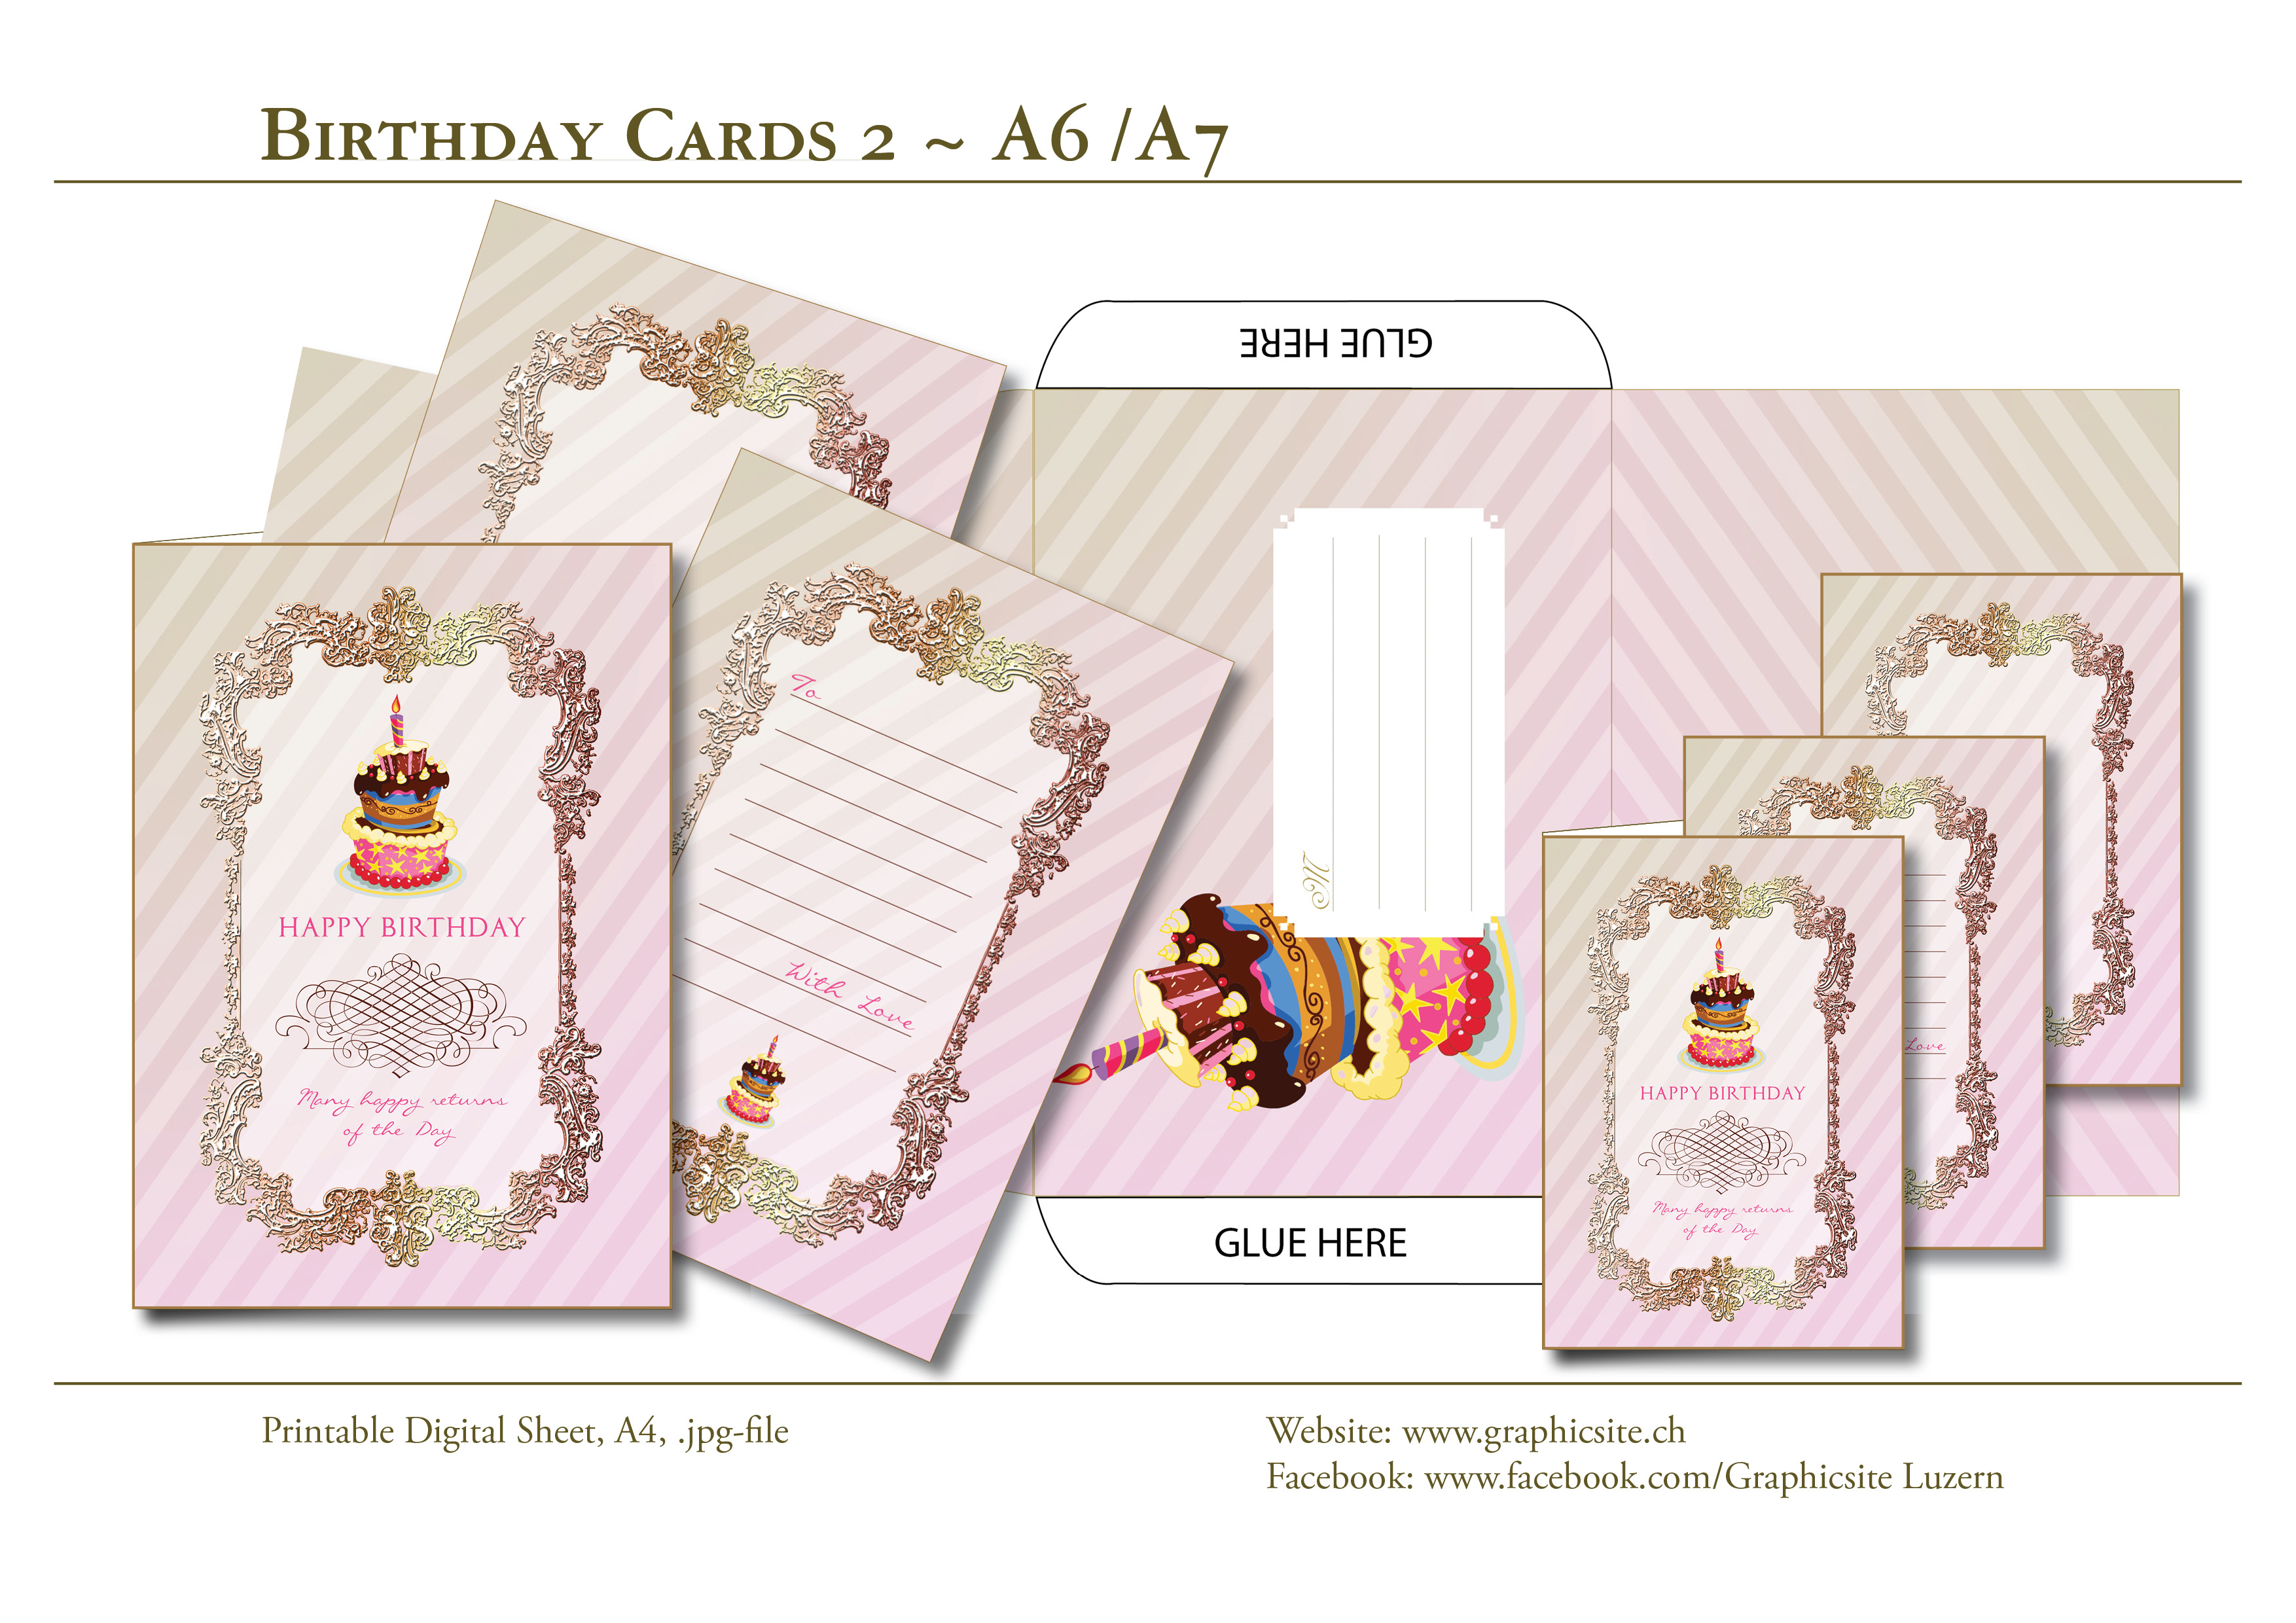 Printable Digital Sheets - Birthday Card Collection - Birthday Cards 2 - Greeting Cards, Notecards, Envelope, Graphic Design Luzern, Schweiz